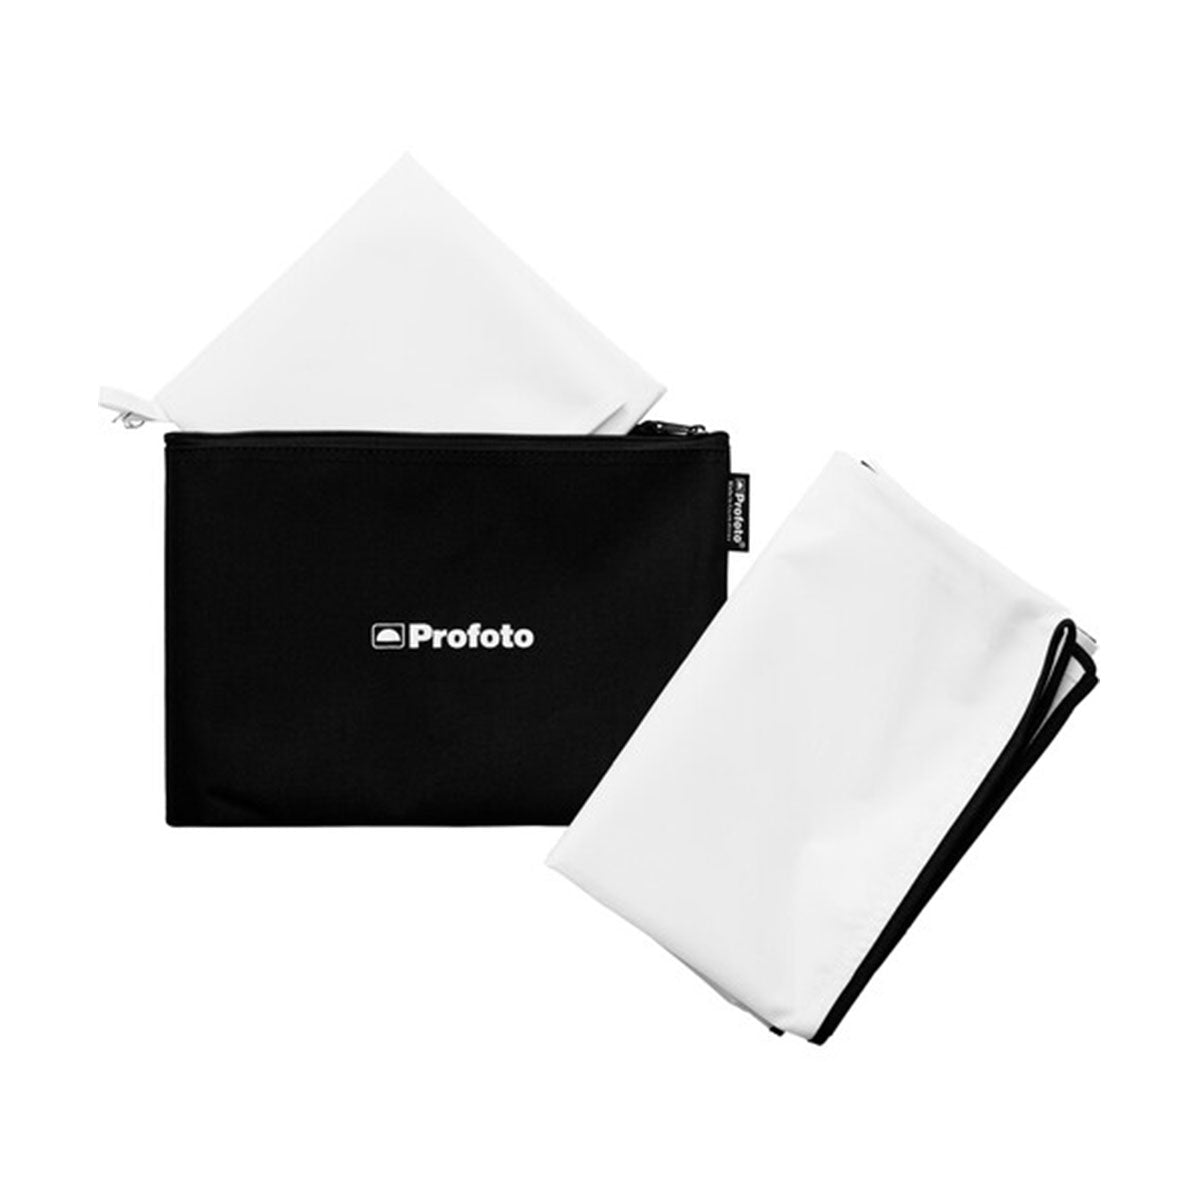 Profoto Rectangle Softbox 2x3’ Diffuser Kit 1.5 f-stop